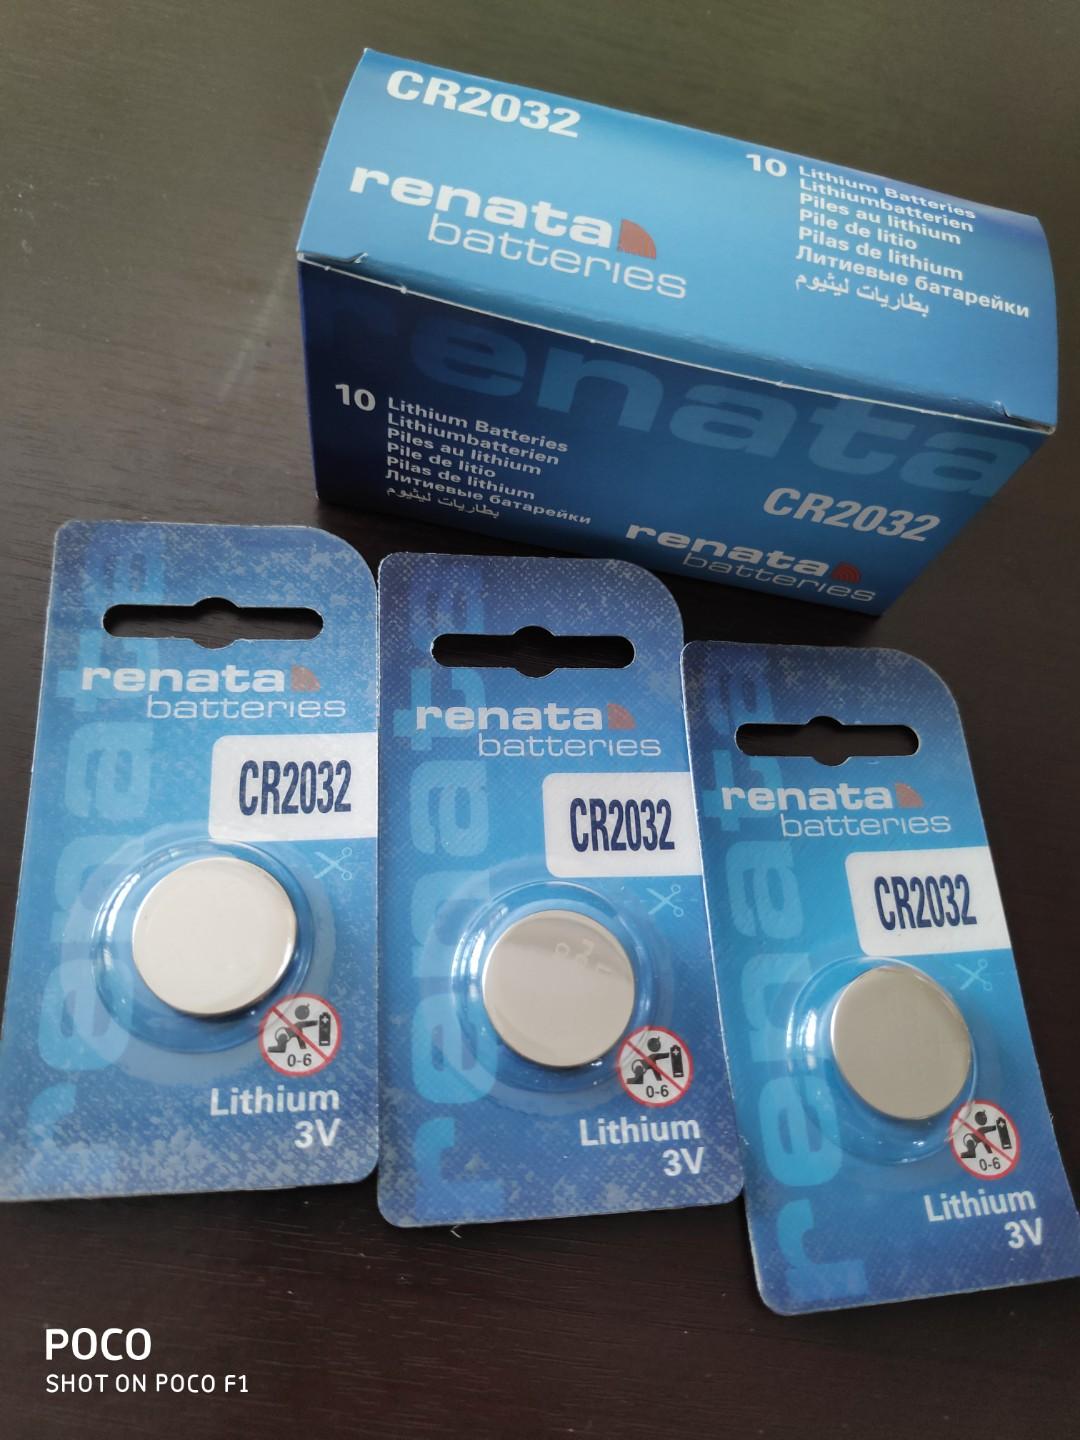 Renata CR2032 Lithium Batteries 3V Single Pack UK Wholesalers